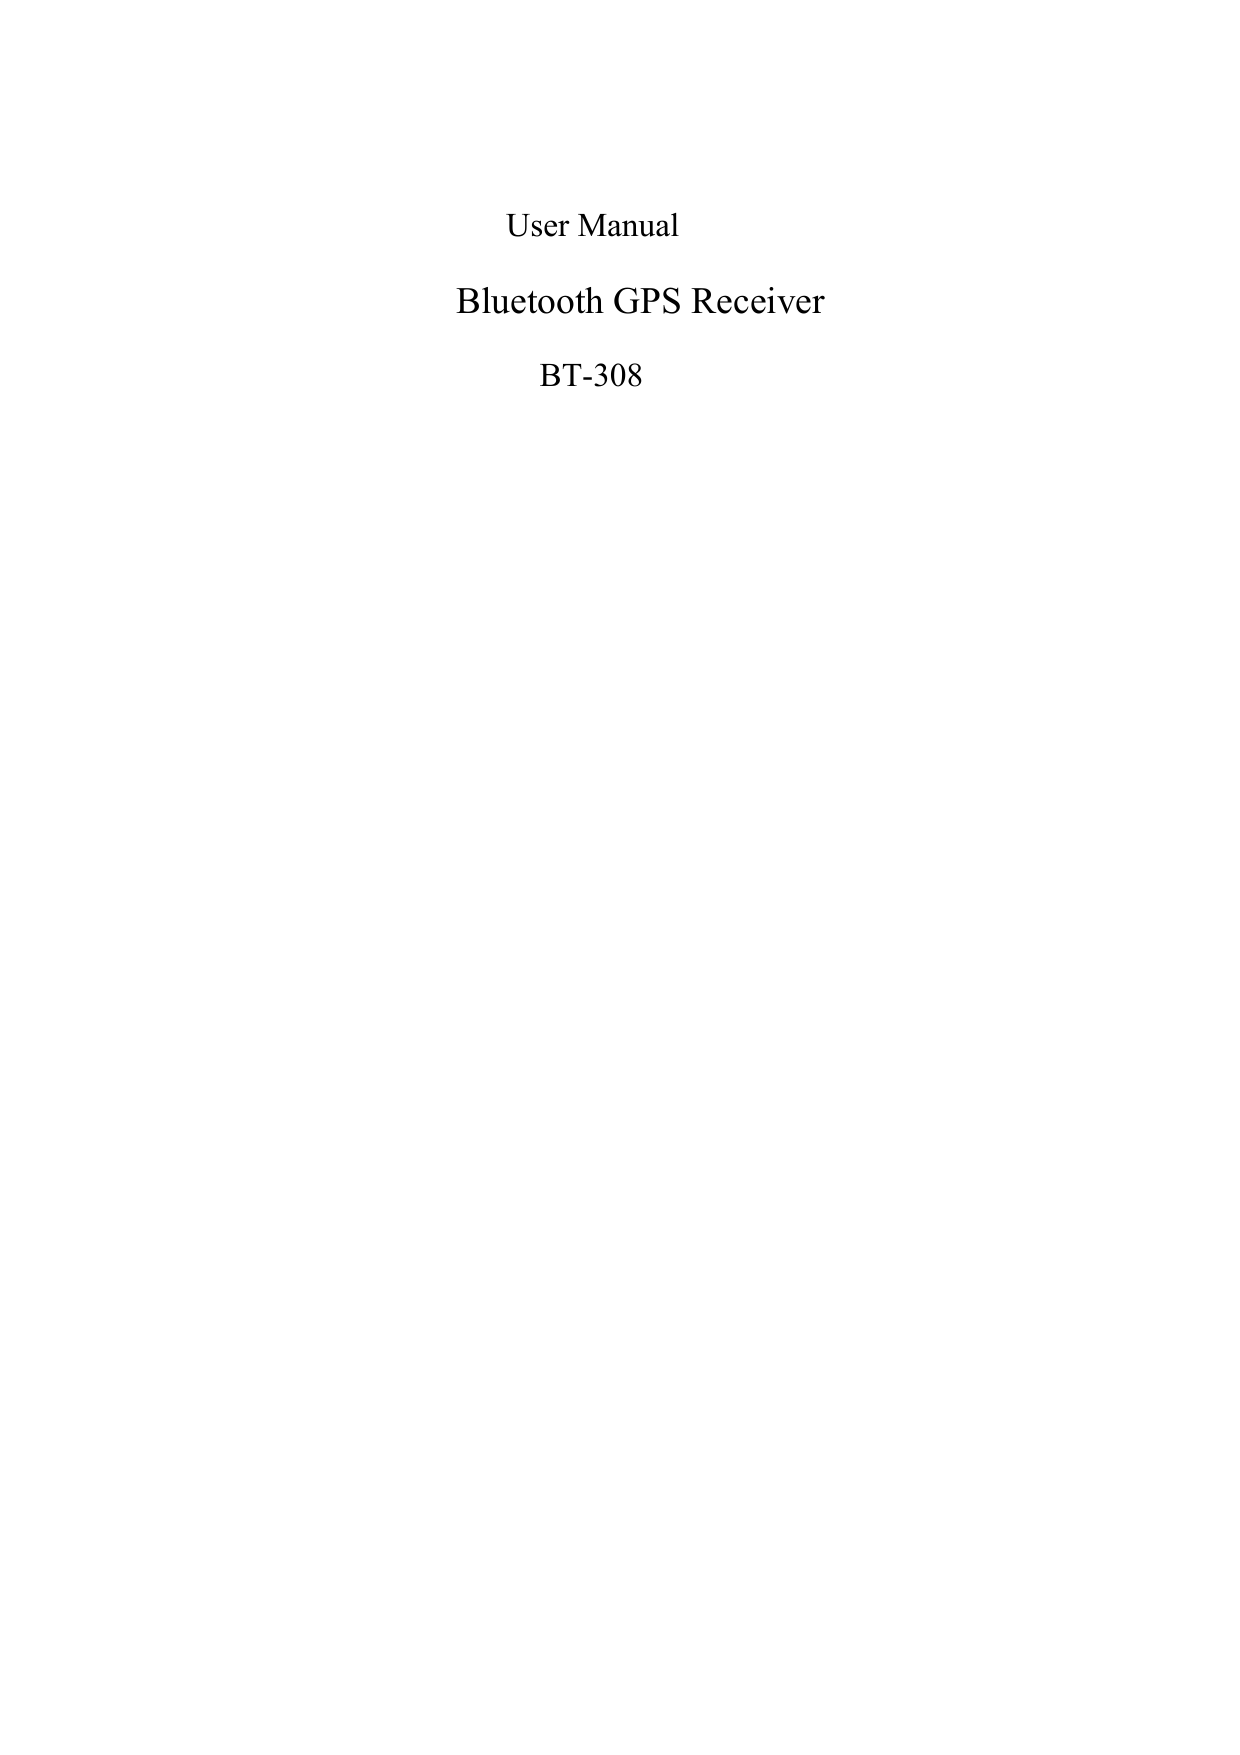         User Manual             Bluetooth GPS Receiver         BT-308                                  